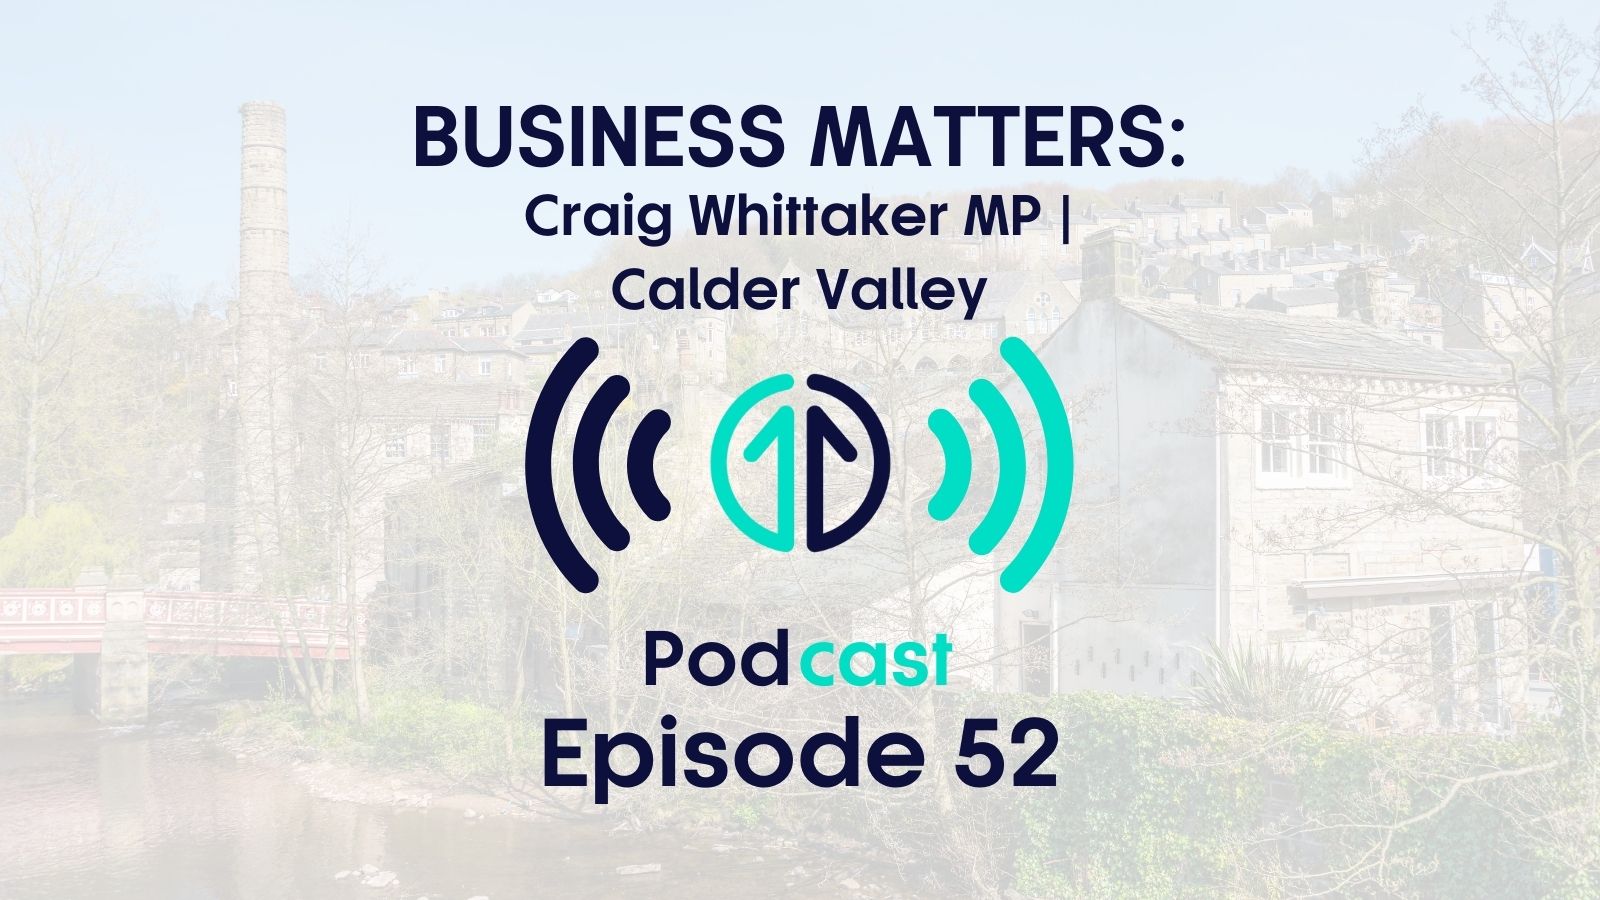 Business Matters: Craig Whittaker MP, Calder Valley | Episode 52